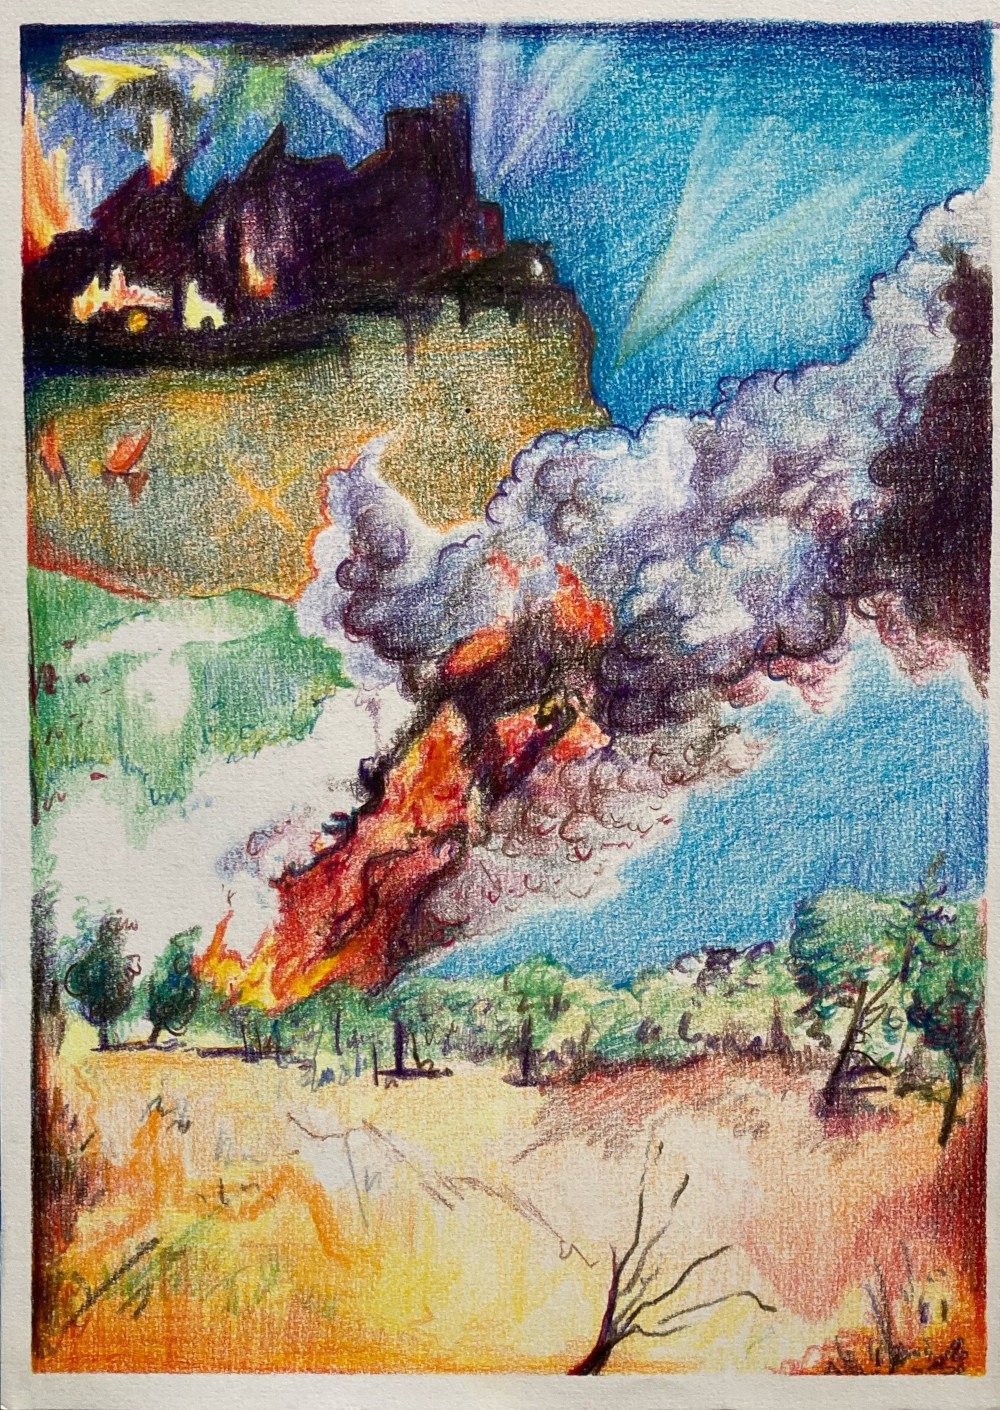 Wouter van de Koot drawing color pencil orchard skyline medieval fire smoke